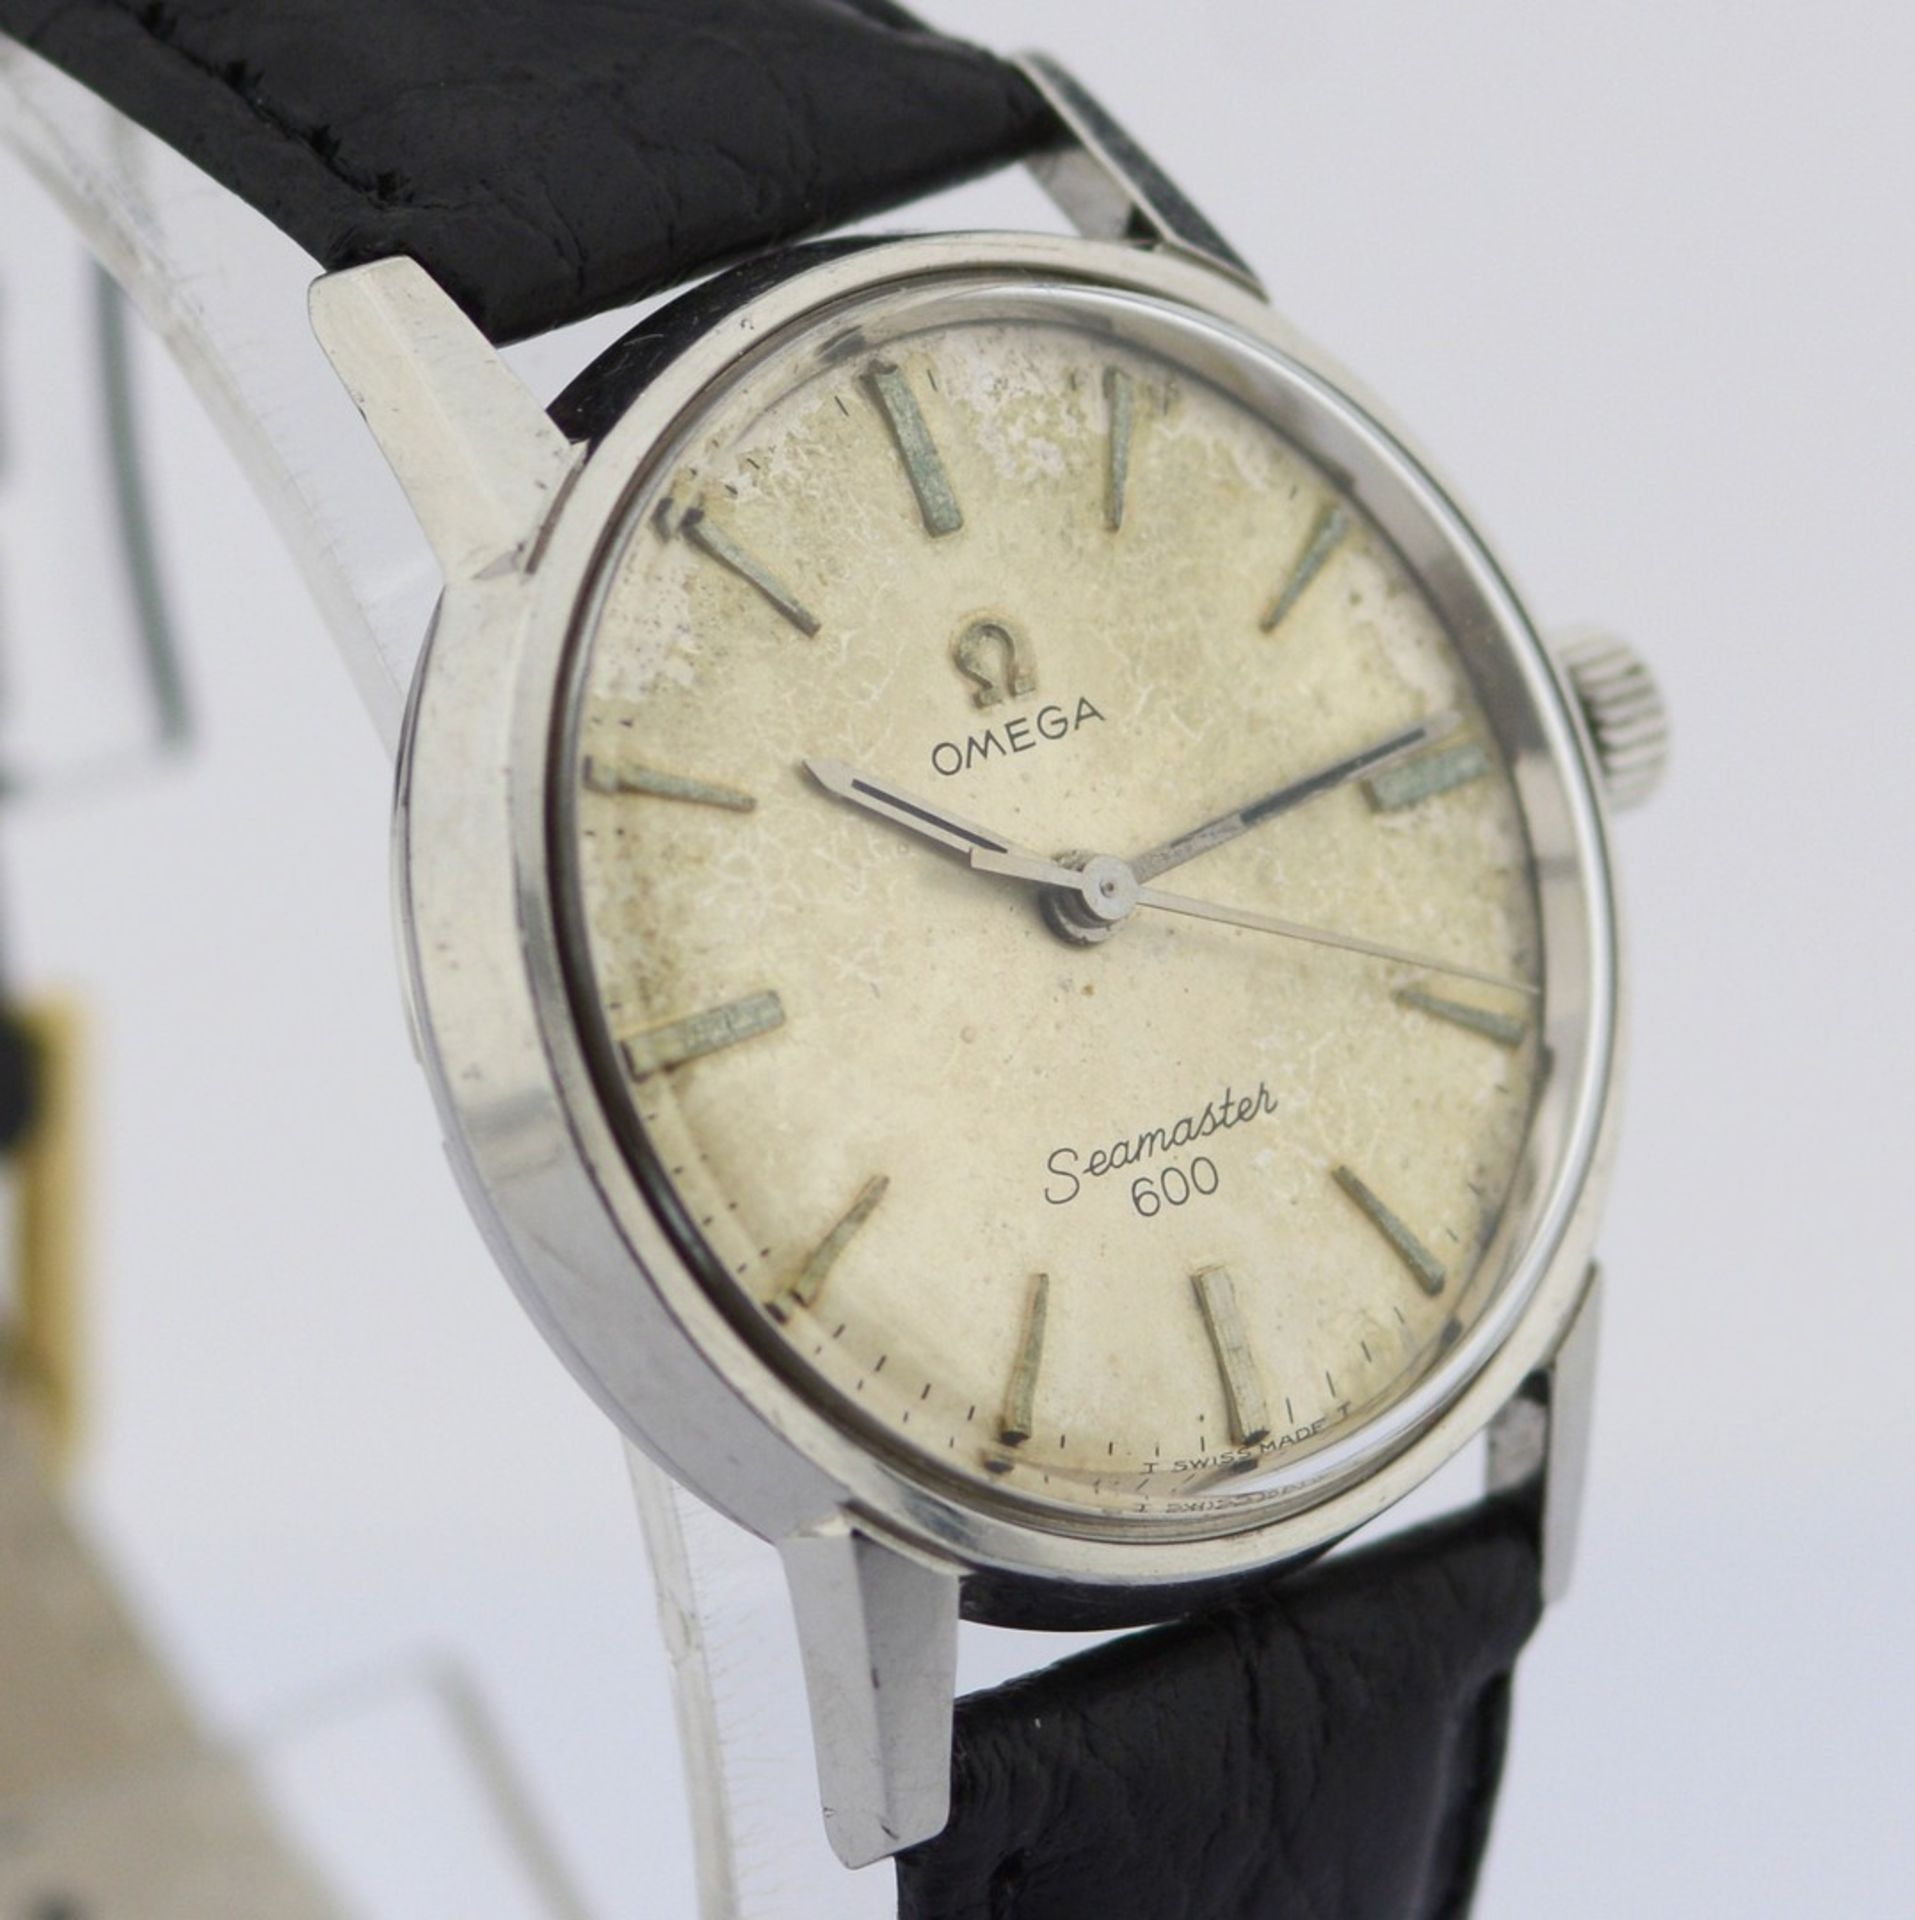 Omega / Seamaster 600 Vintage - Gentlmen's Steel Wrist Watch - Image 3 of 7